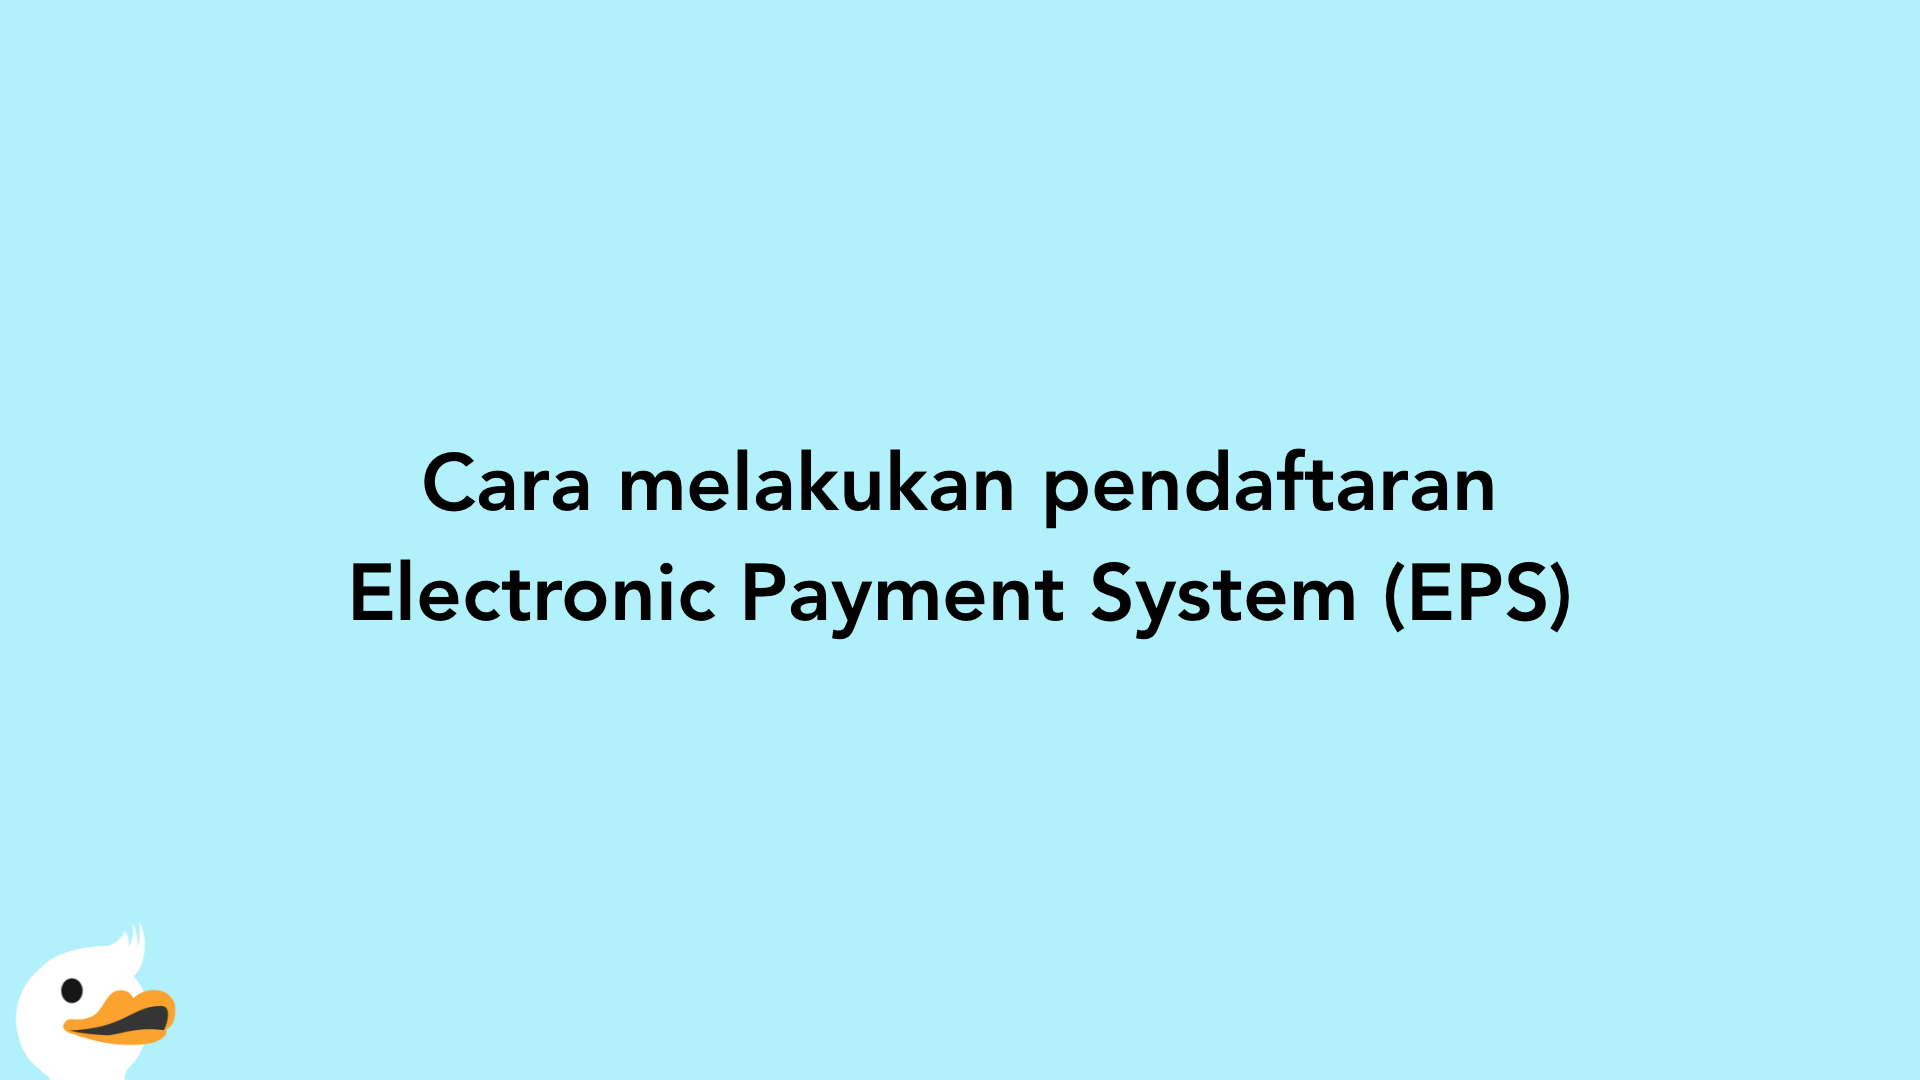 Cara melakukan pendaftaran Electronic Payment System (EPS)